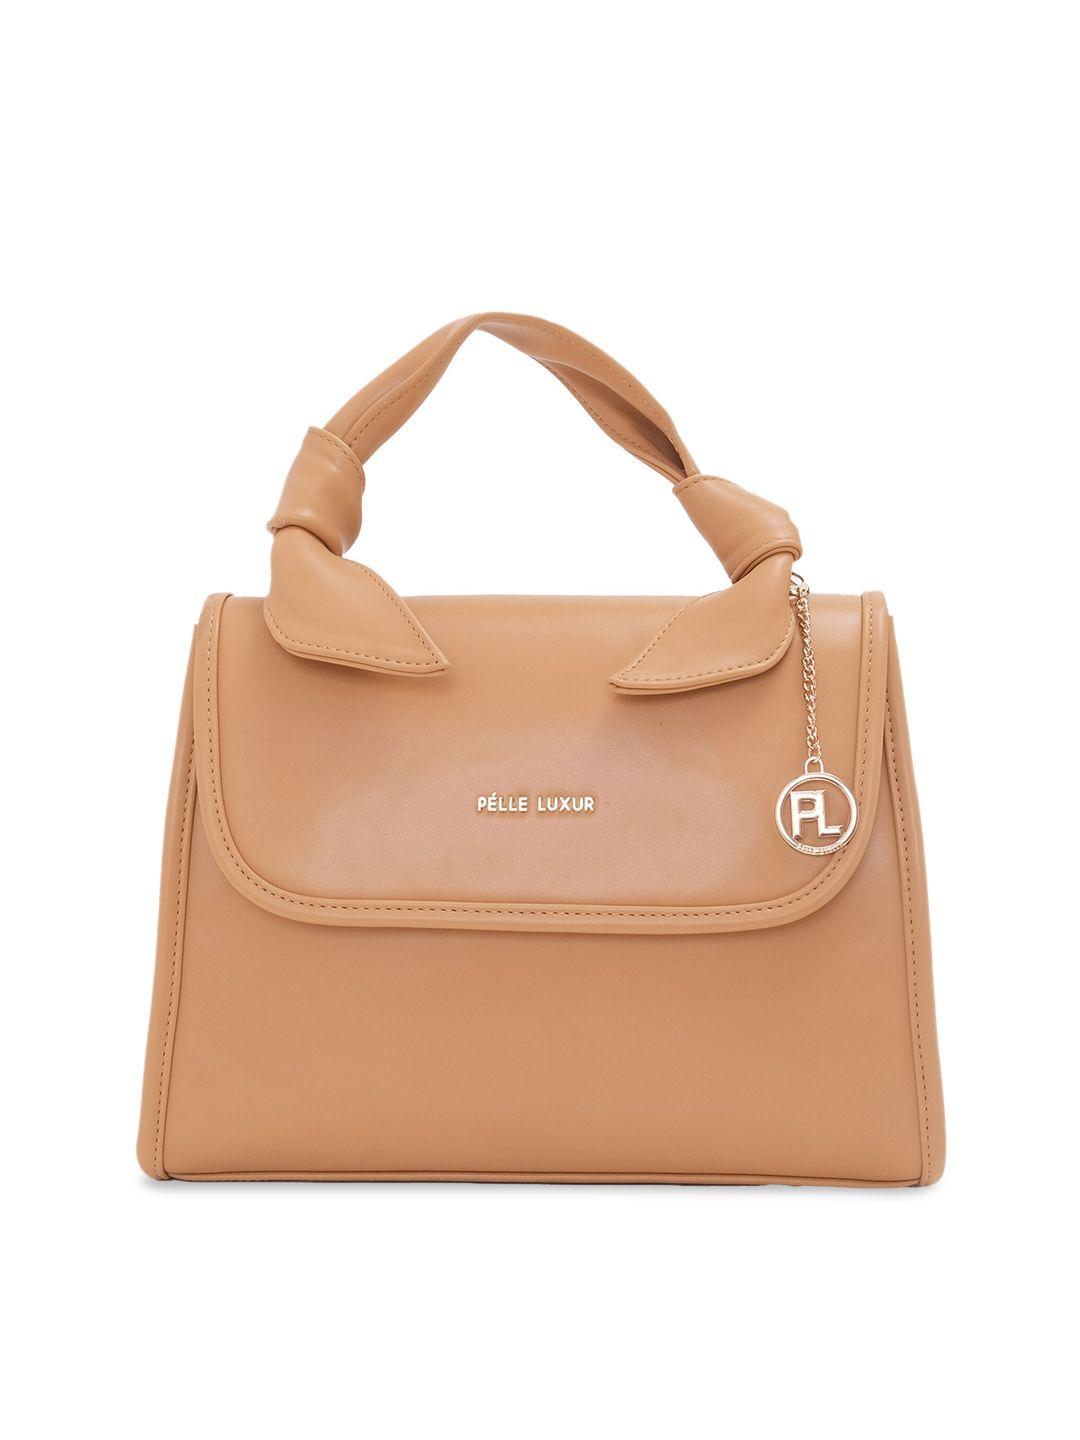 pelle luxur tan leather structured handheld bag